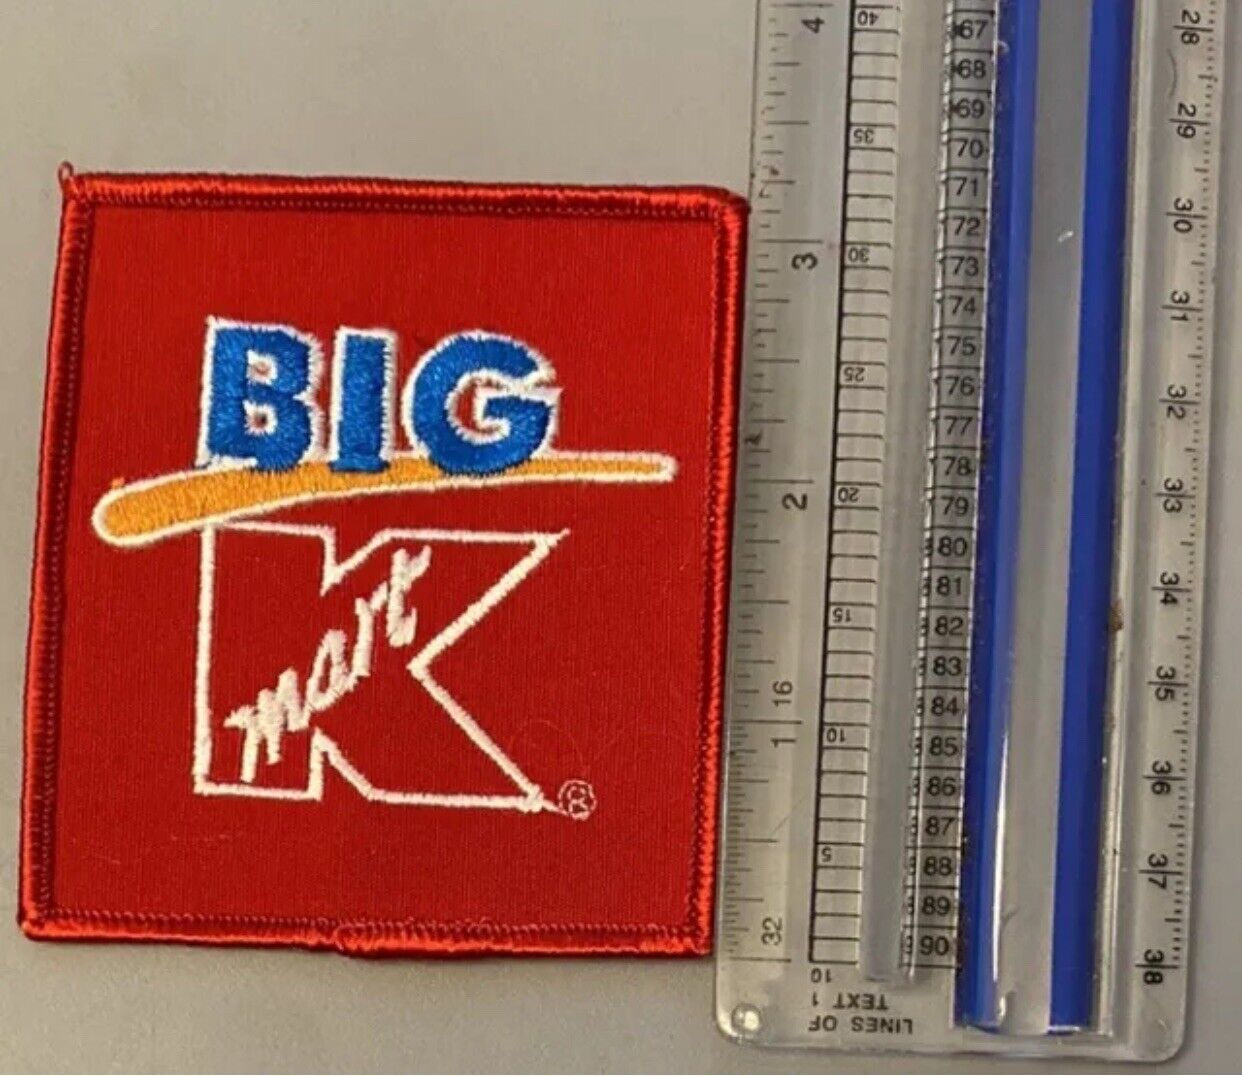 VINTAGE K-MART COMPANY BIG K RED ASSOCIATE VEST PATCH 3 1/4 INCHES X 3” KMART